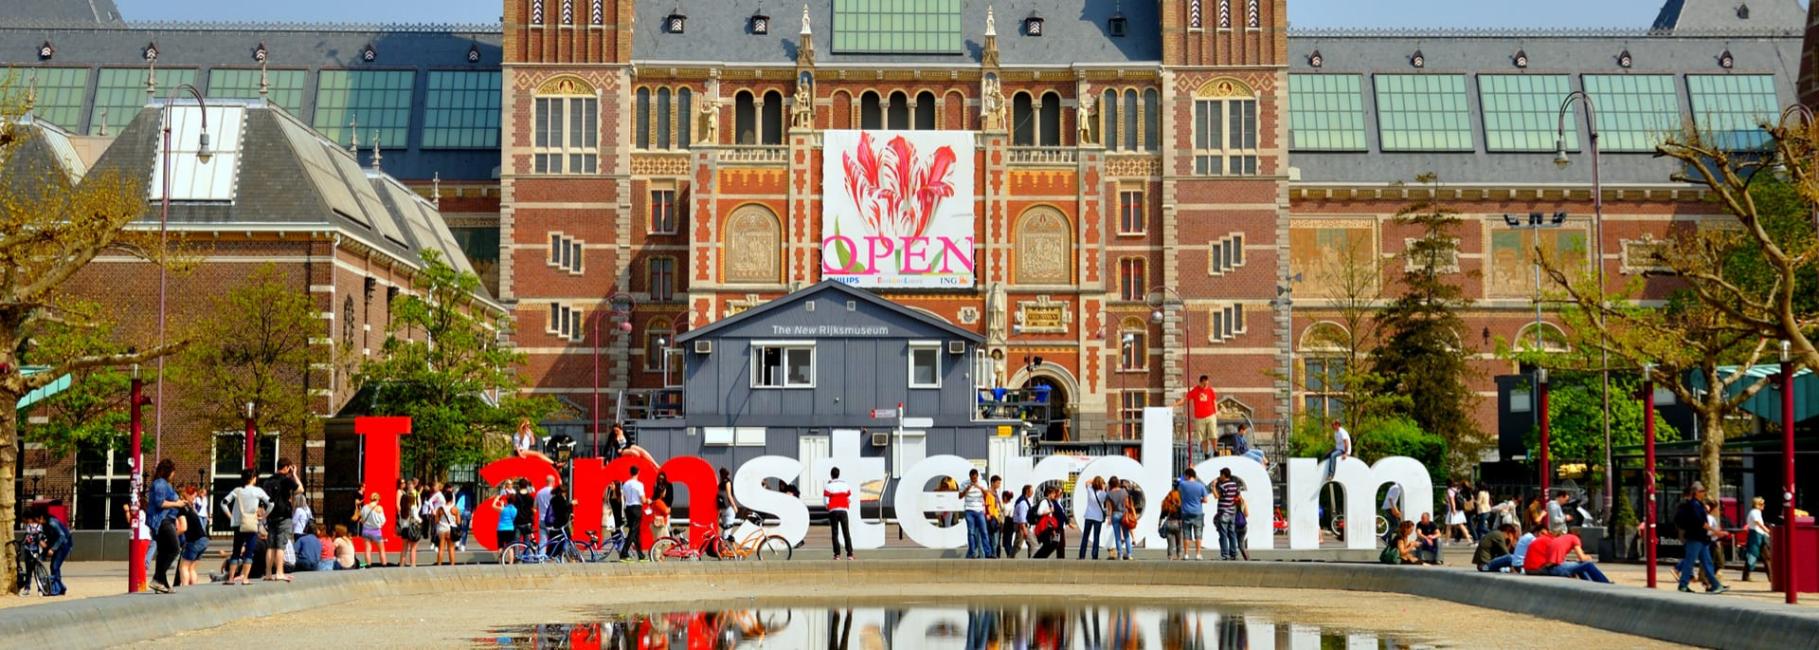 amsterdam art trip header slk fe